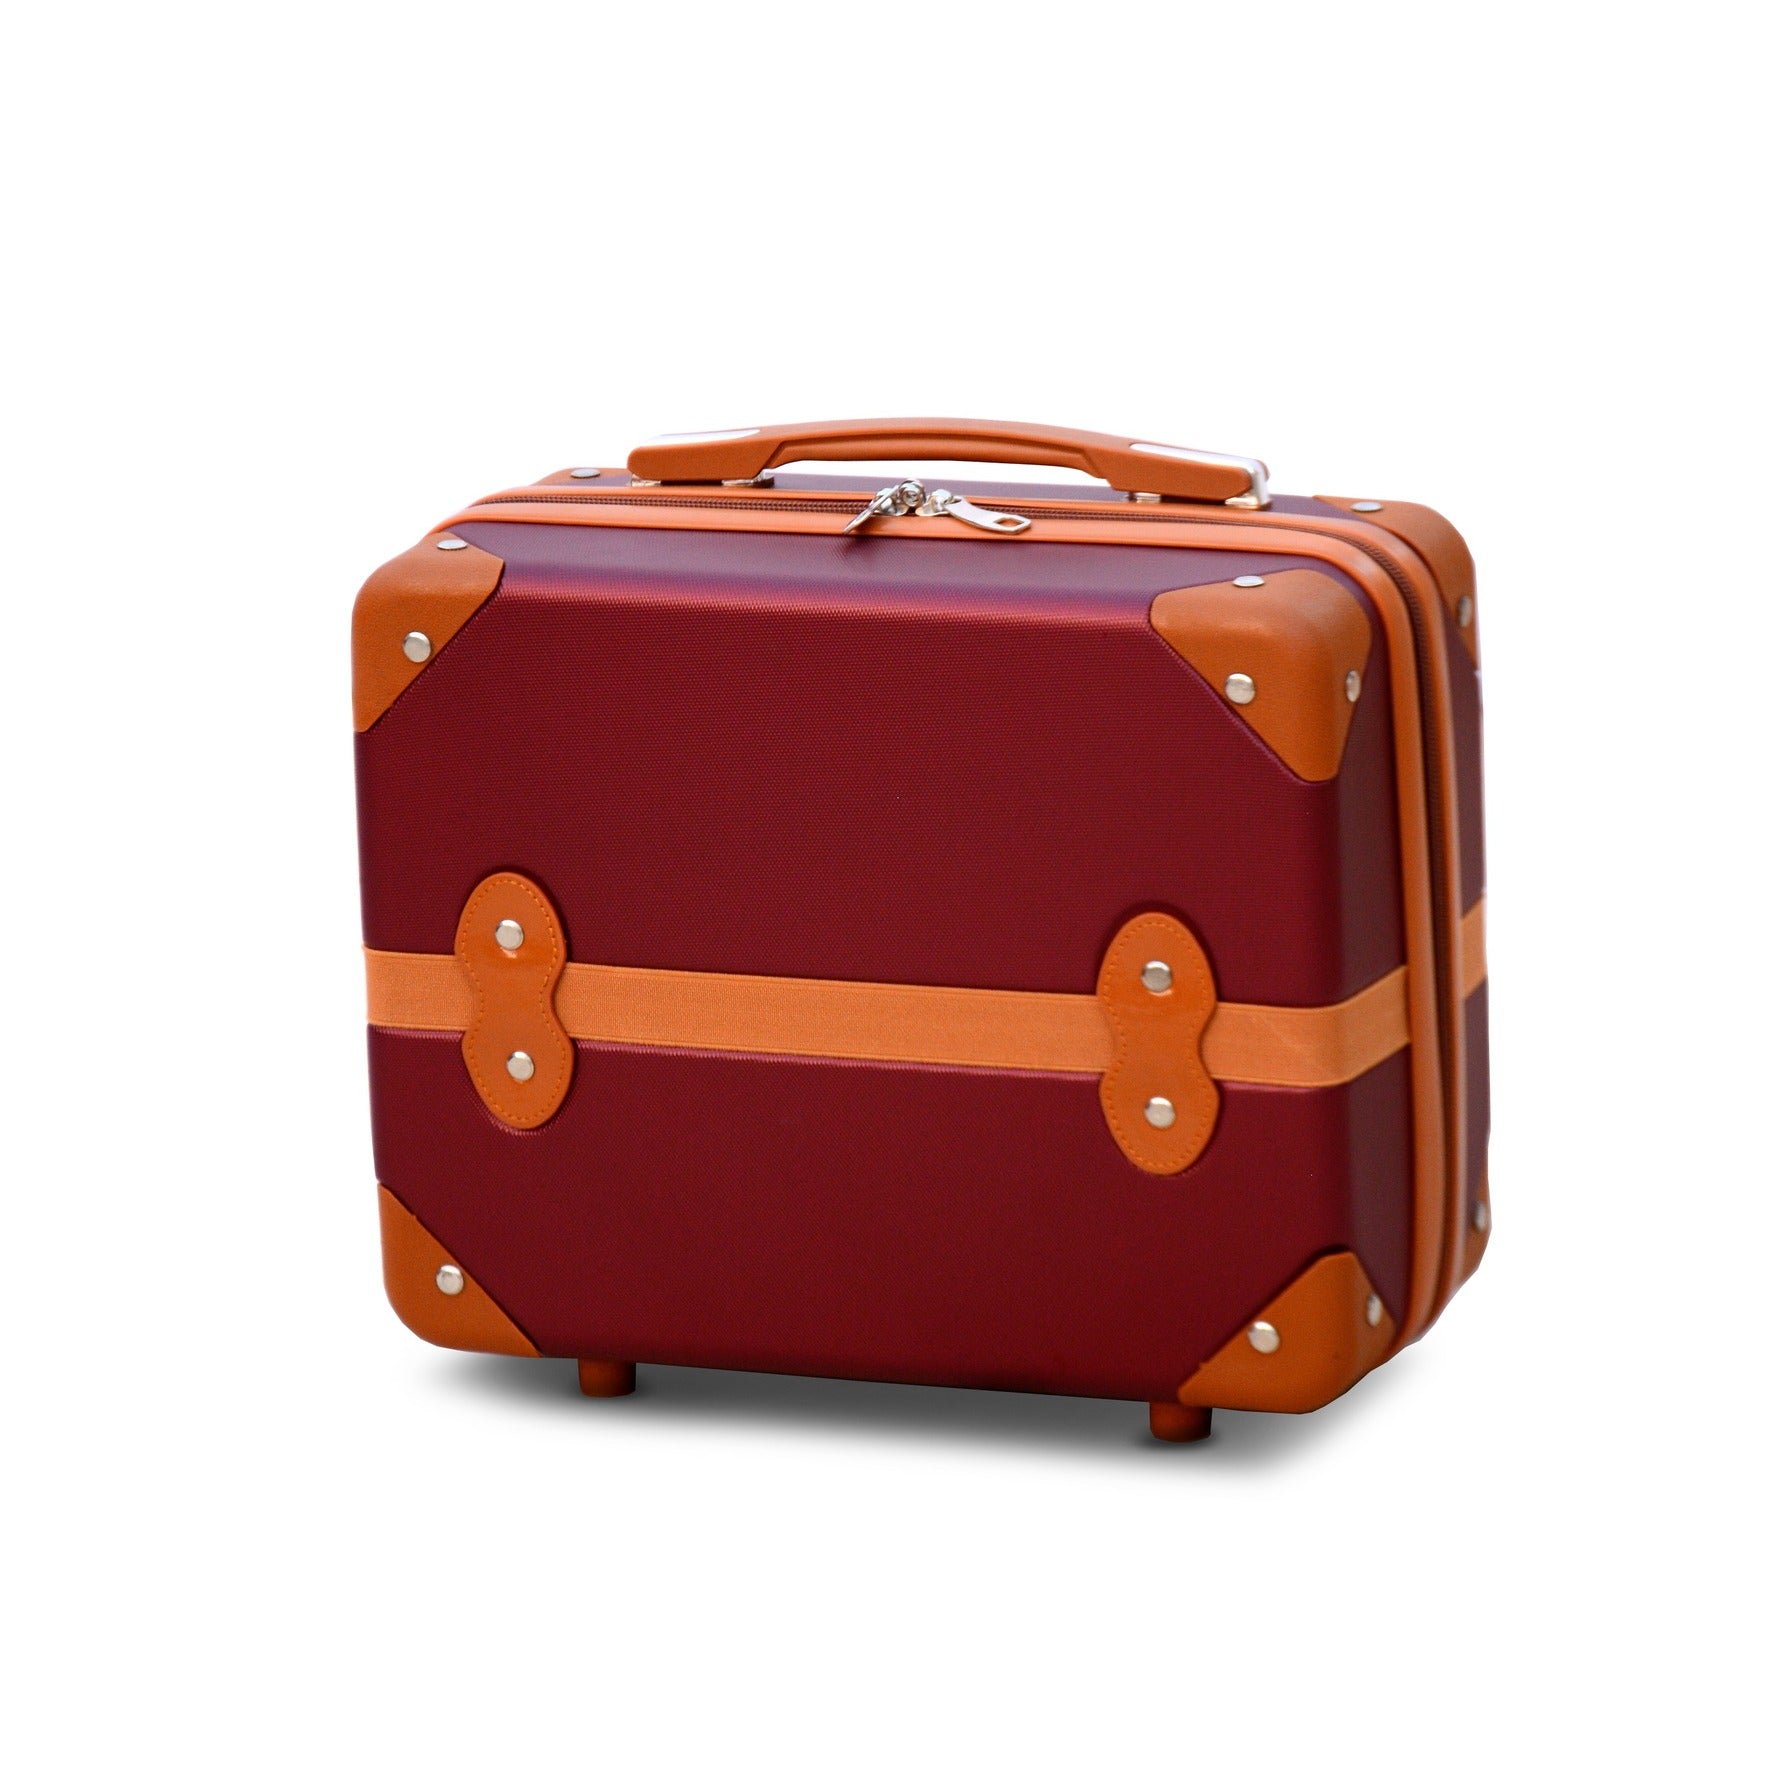 4 Piece Set 7” 20” 24” 28 inches Burgundy Corner Guard ABS Lightweight Spinner Wheel Luggage Bag